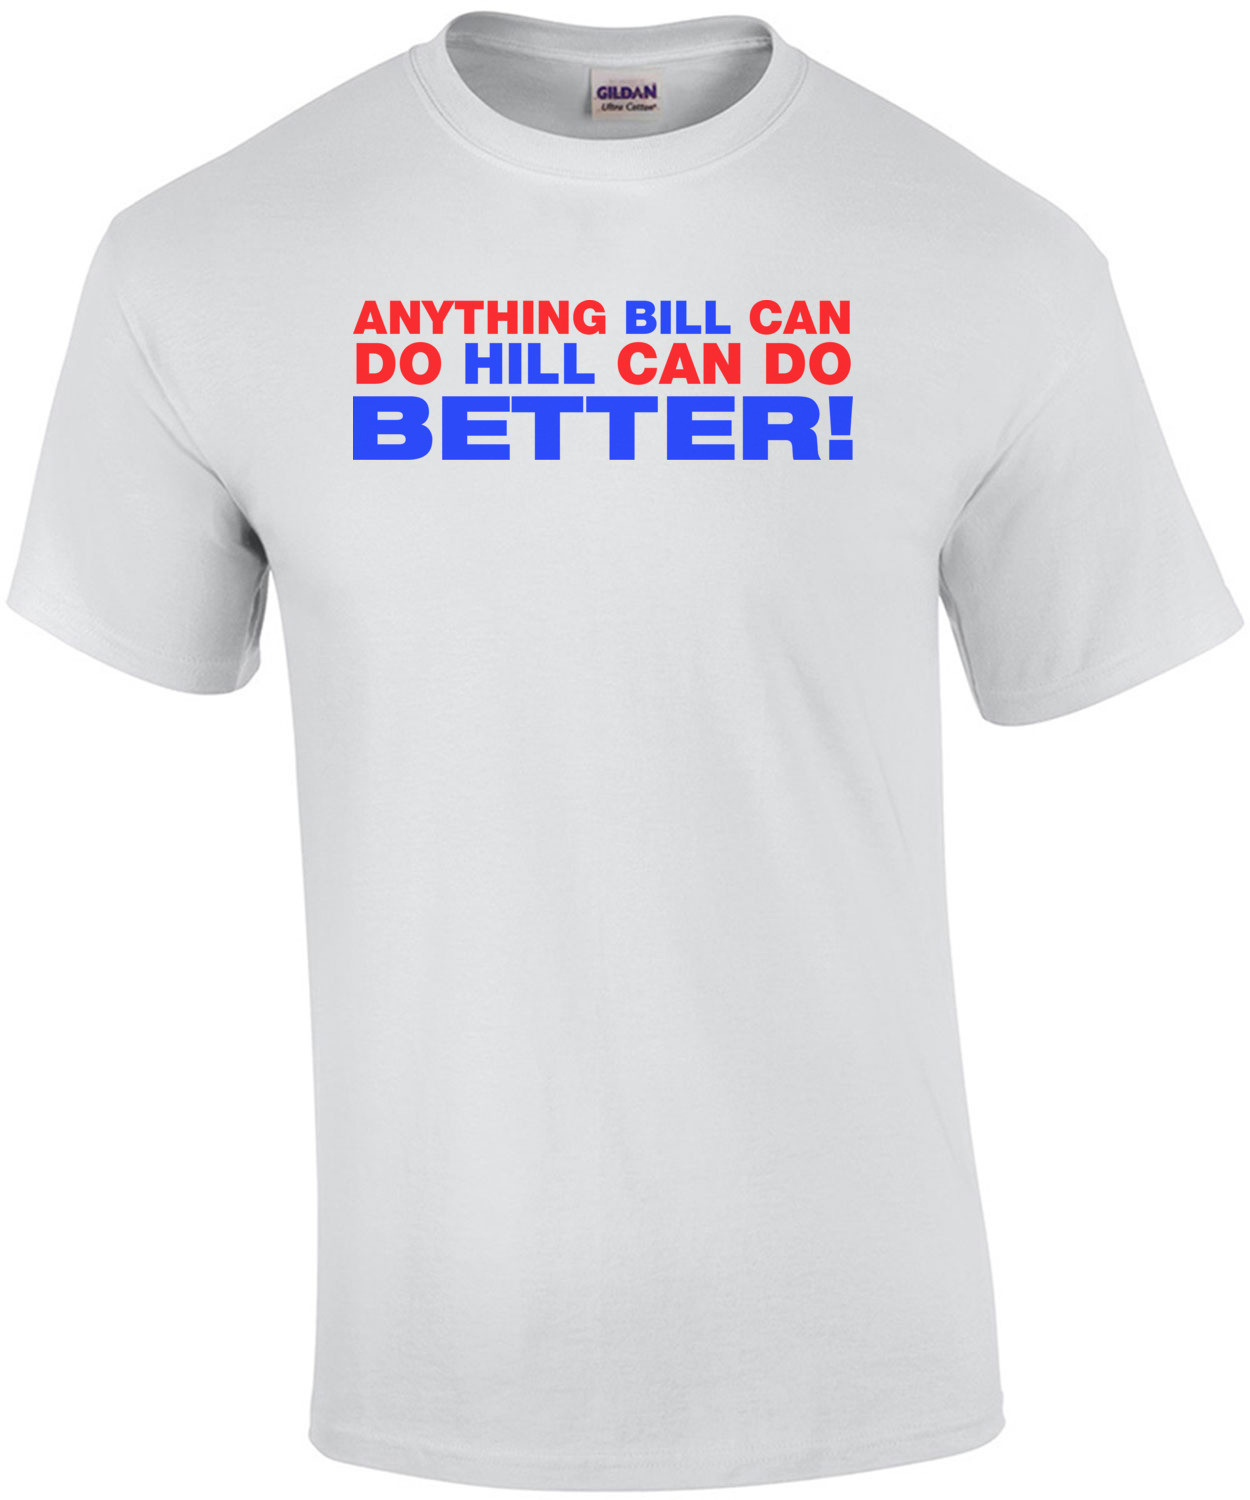 Anything Bill Can Do Hill Can Do Better - Hillary Clinton T-Shirt